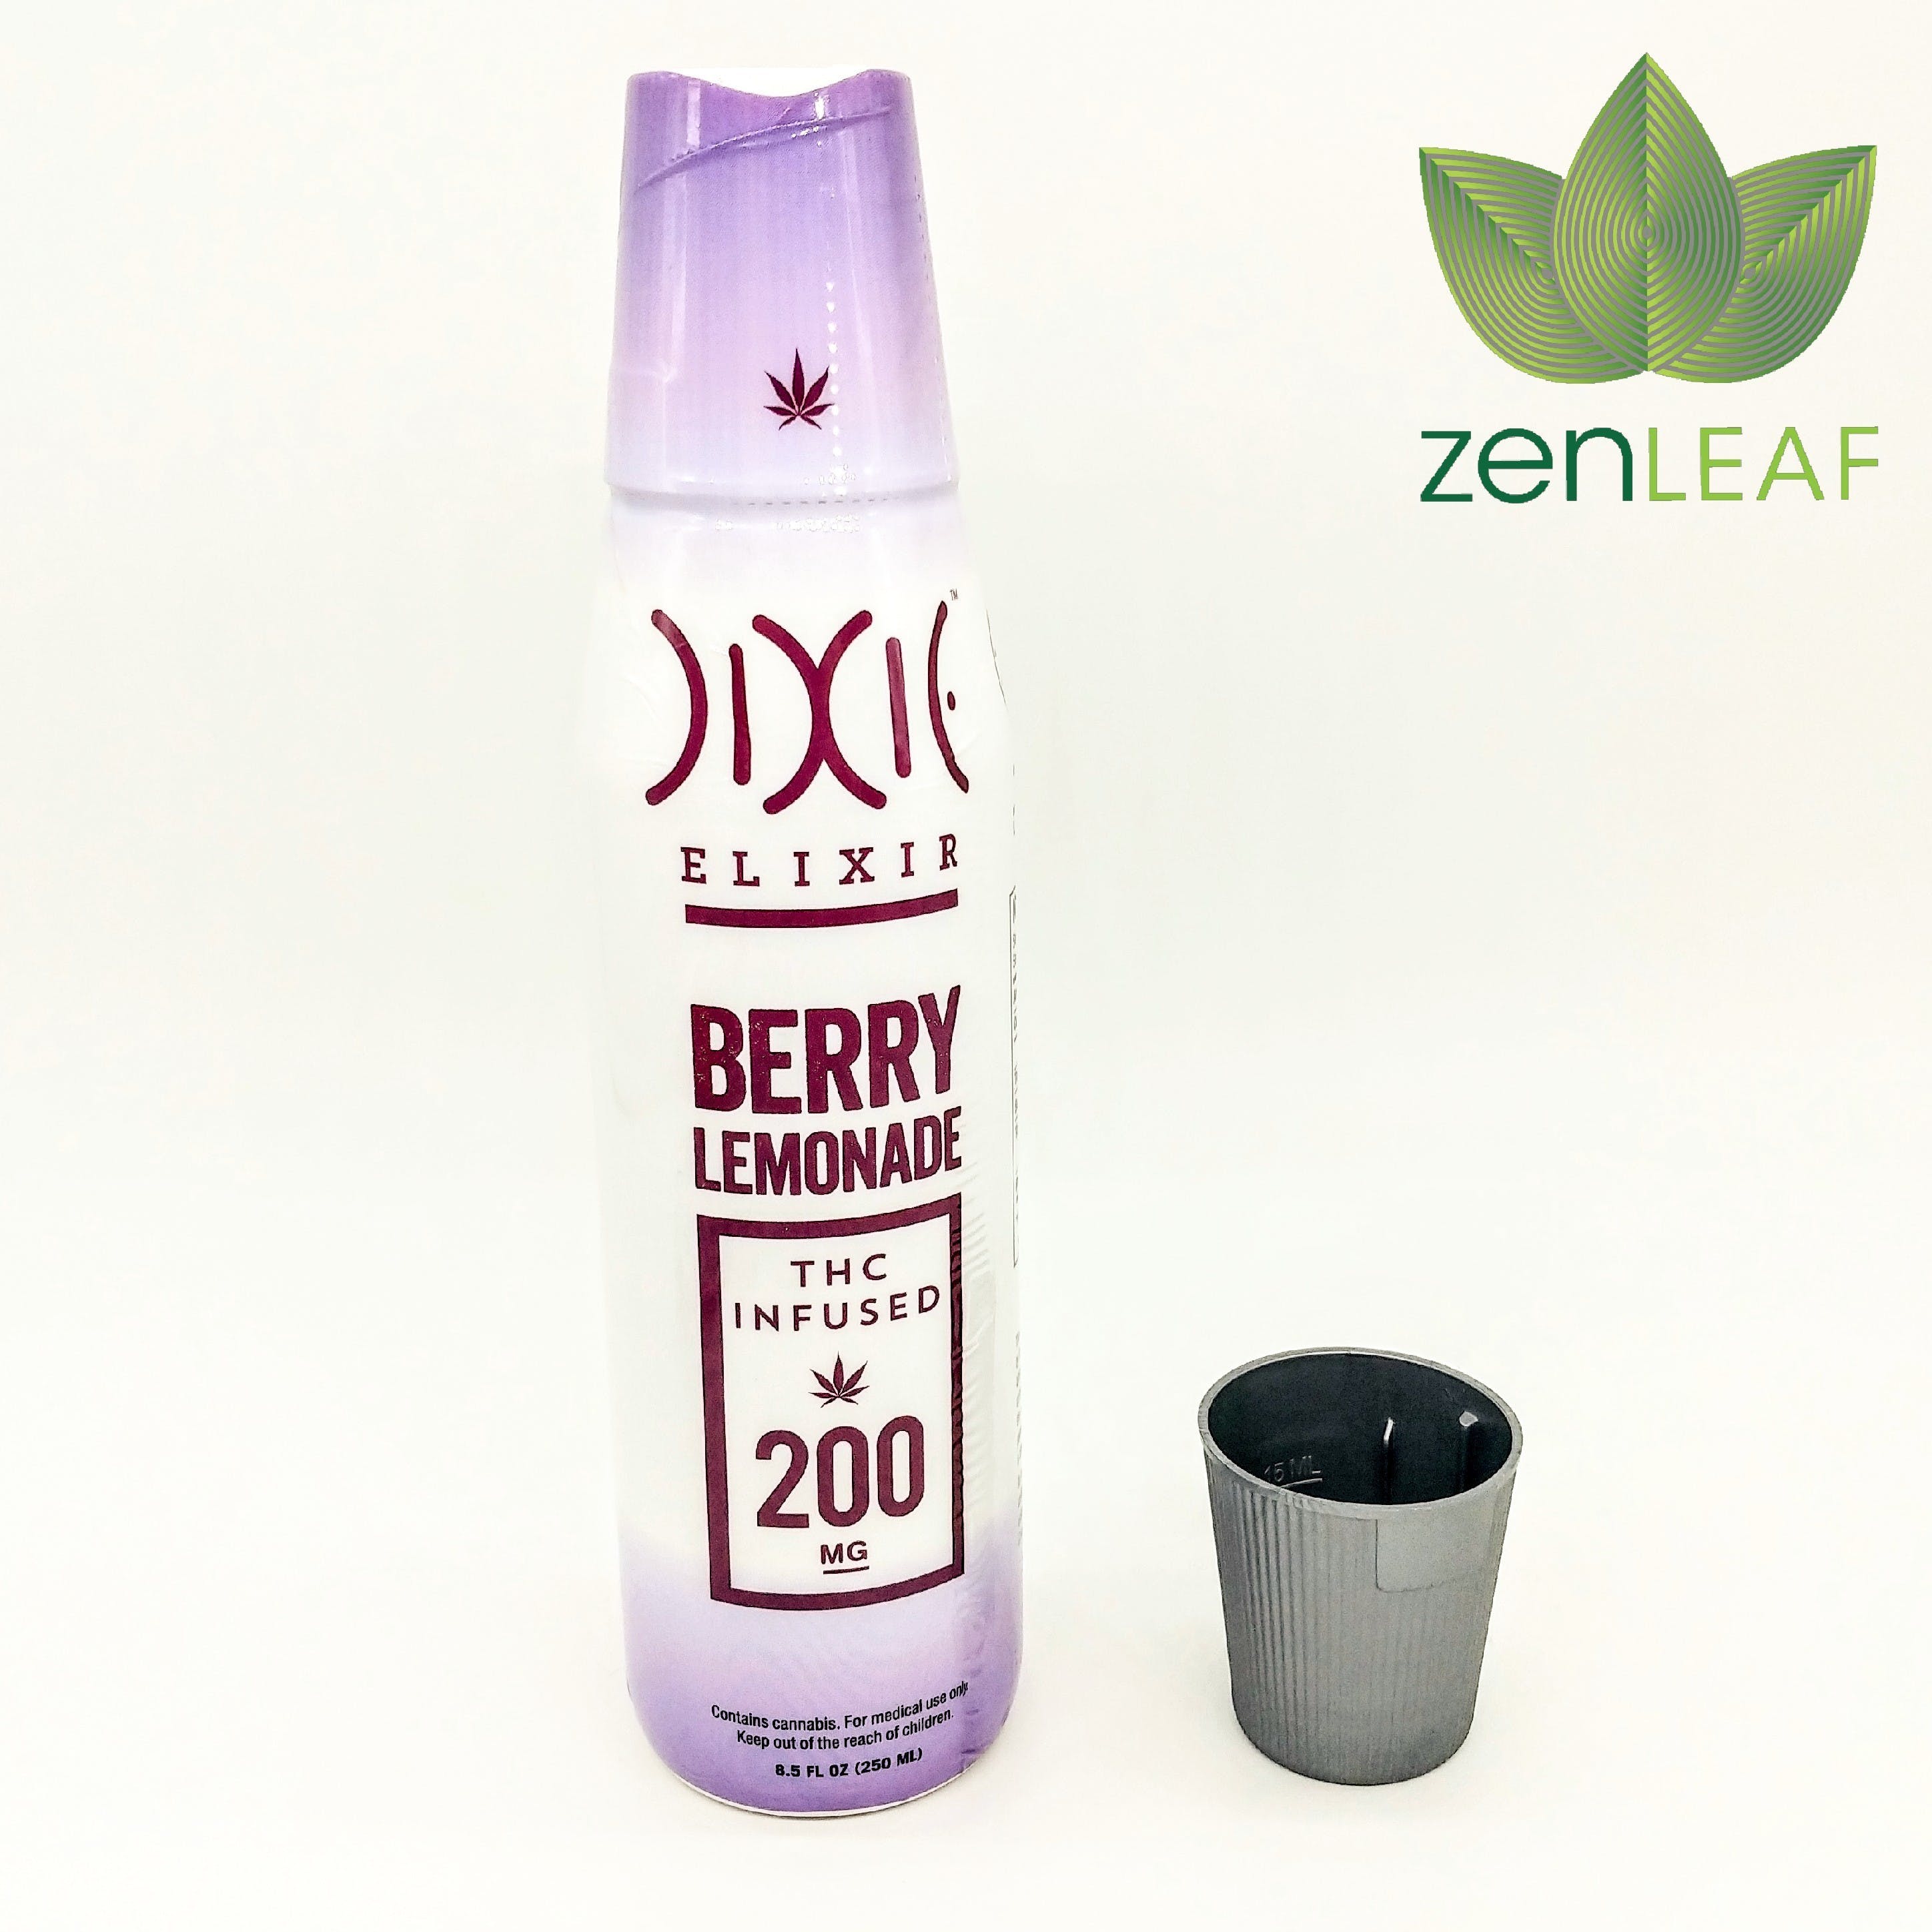 Dixie Elixir Berry Lemonade 200mg